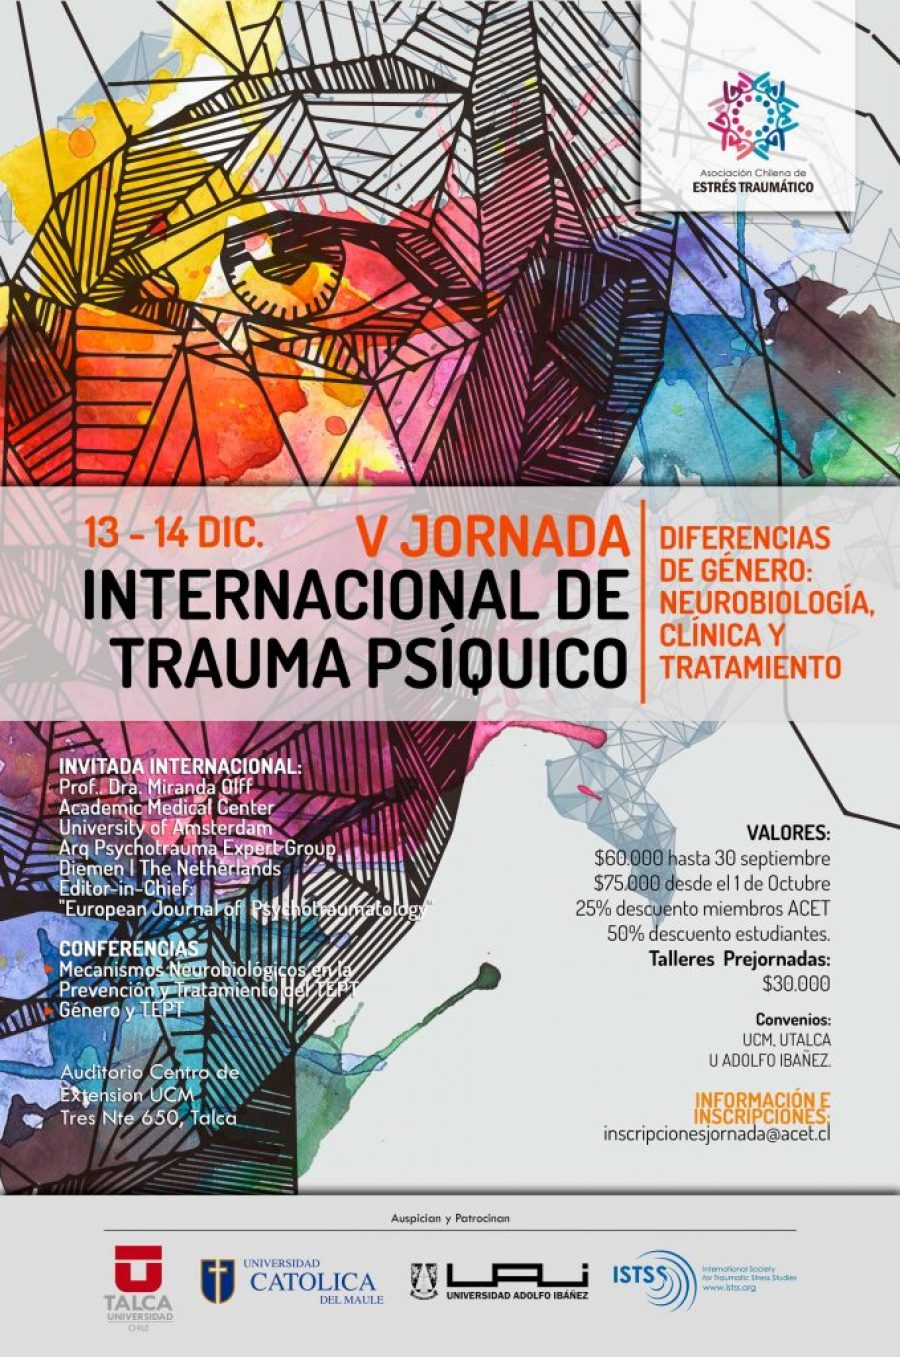 V Jornada Internacional de Trauma Psíquico se realizará en Extensión UCM